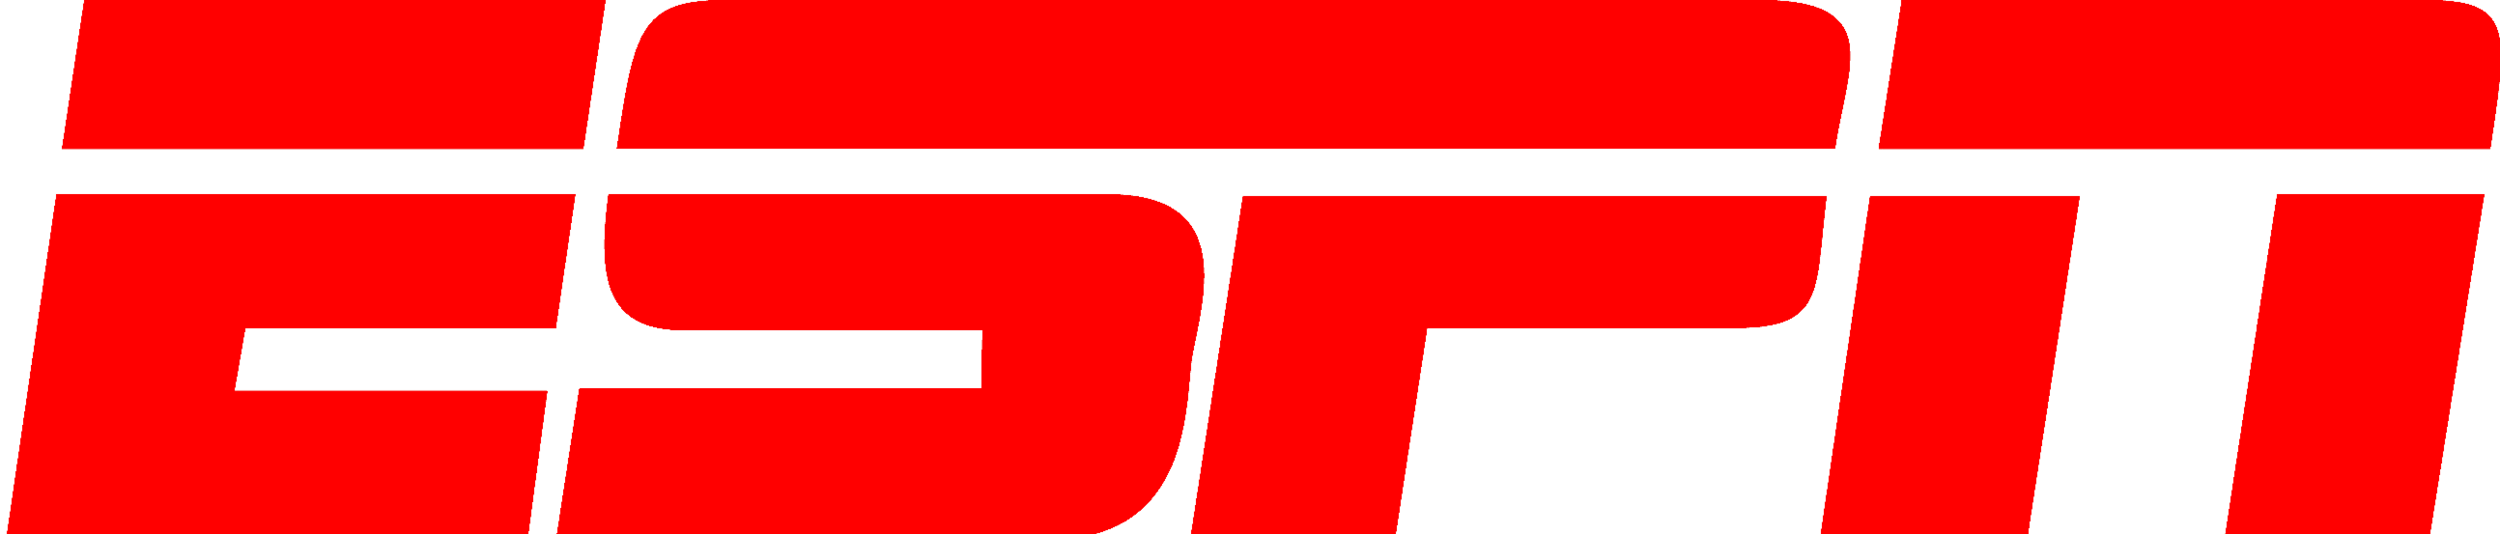 espn-logo.jpg